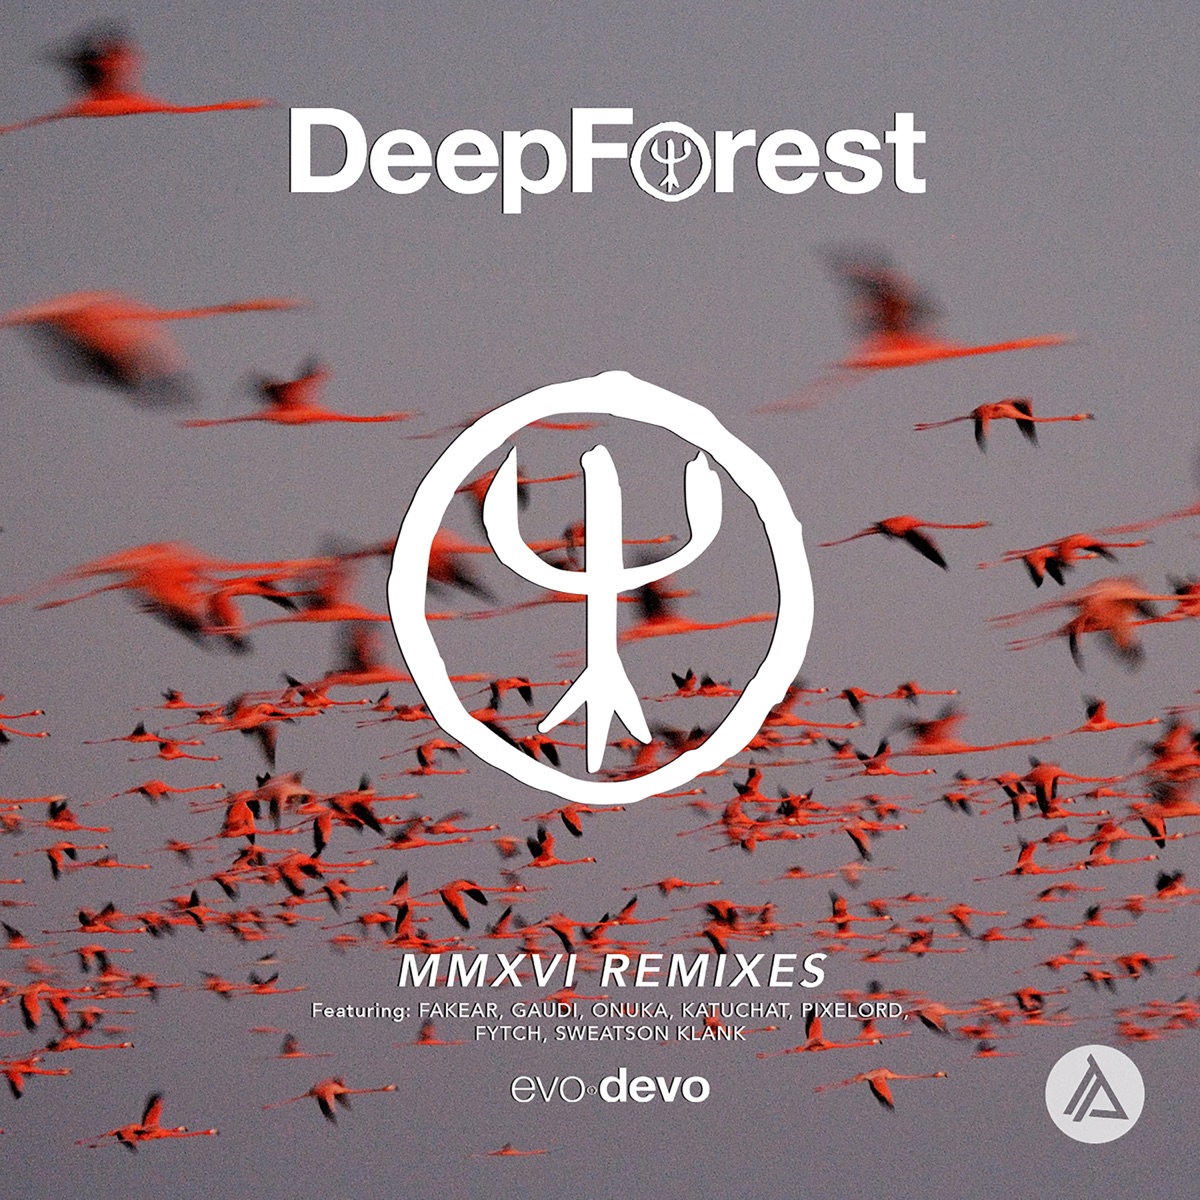 World Mix - Album by Deep Forest - Apple Music